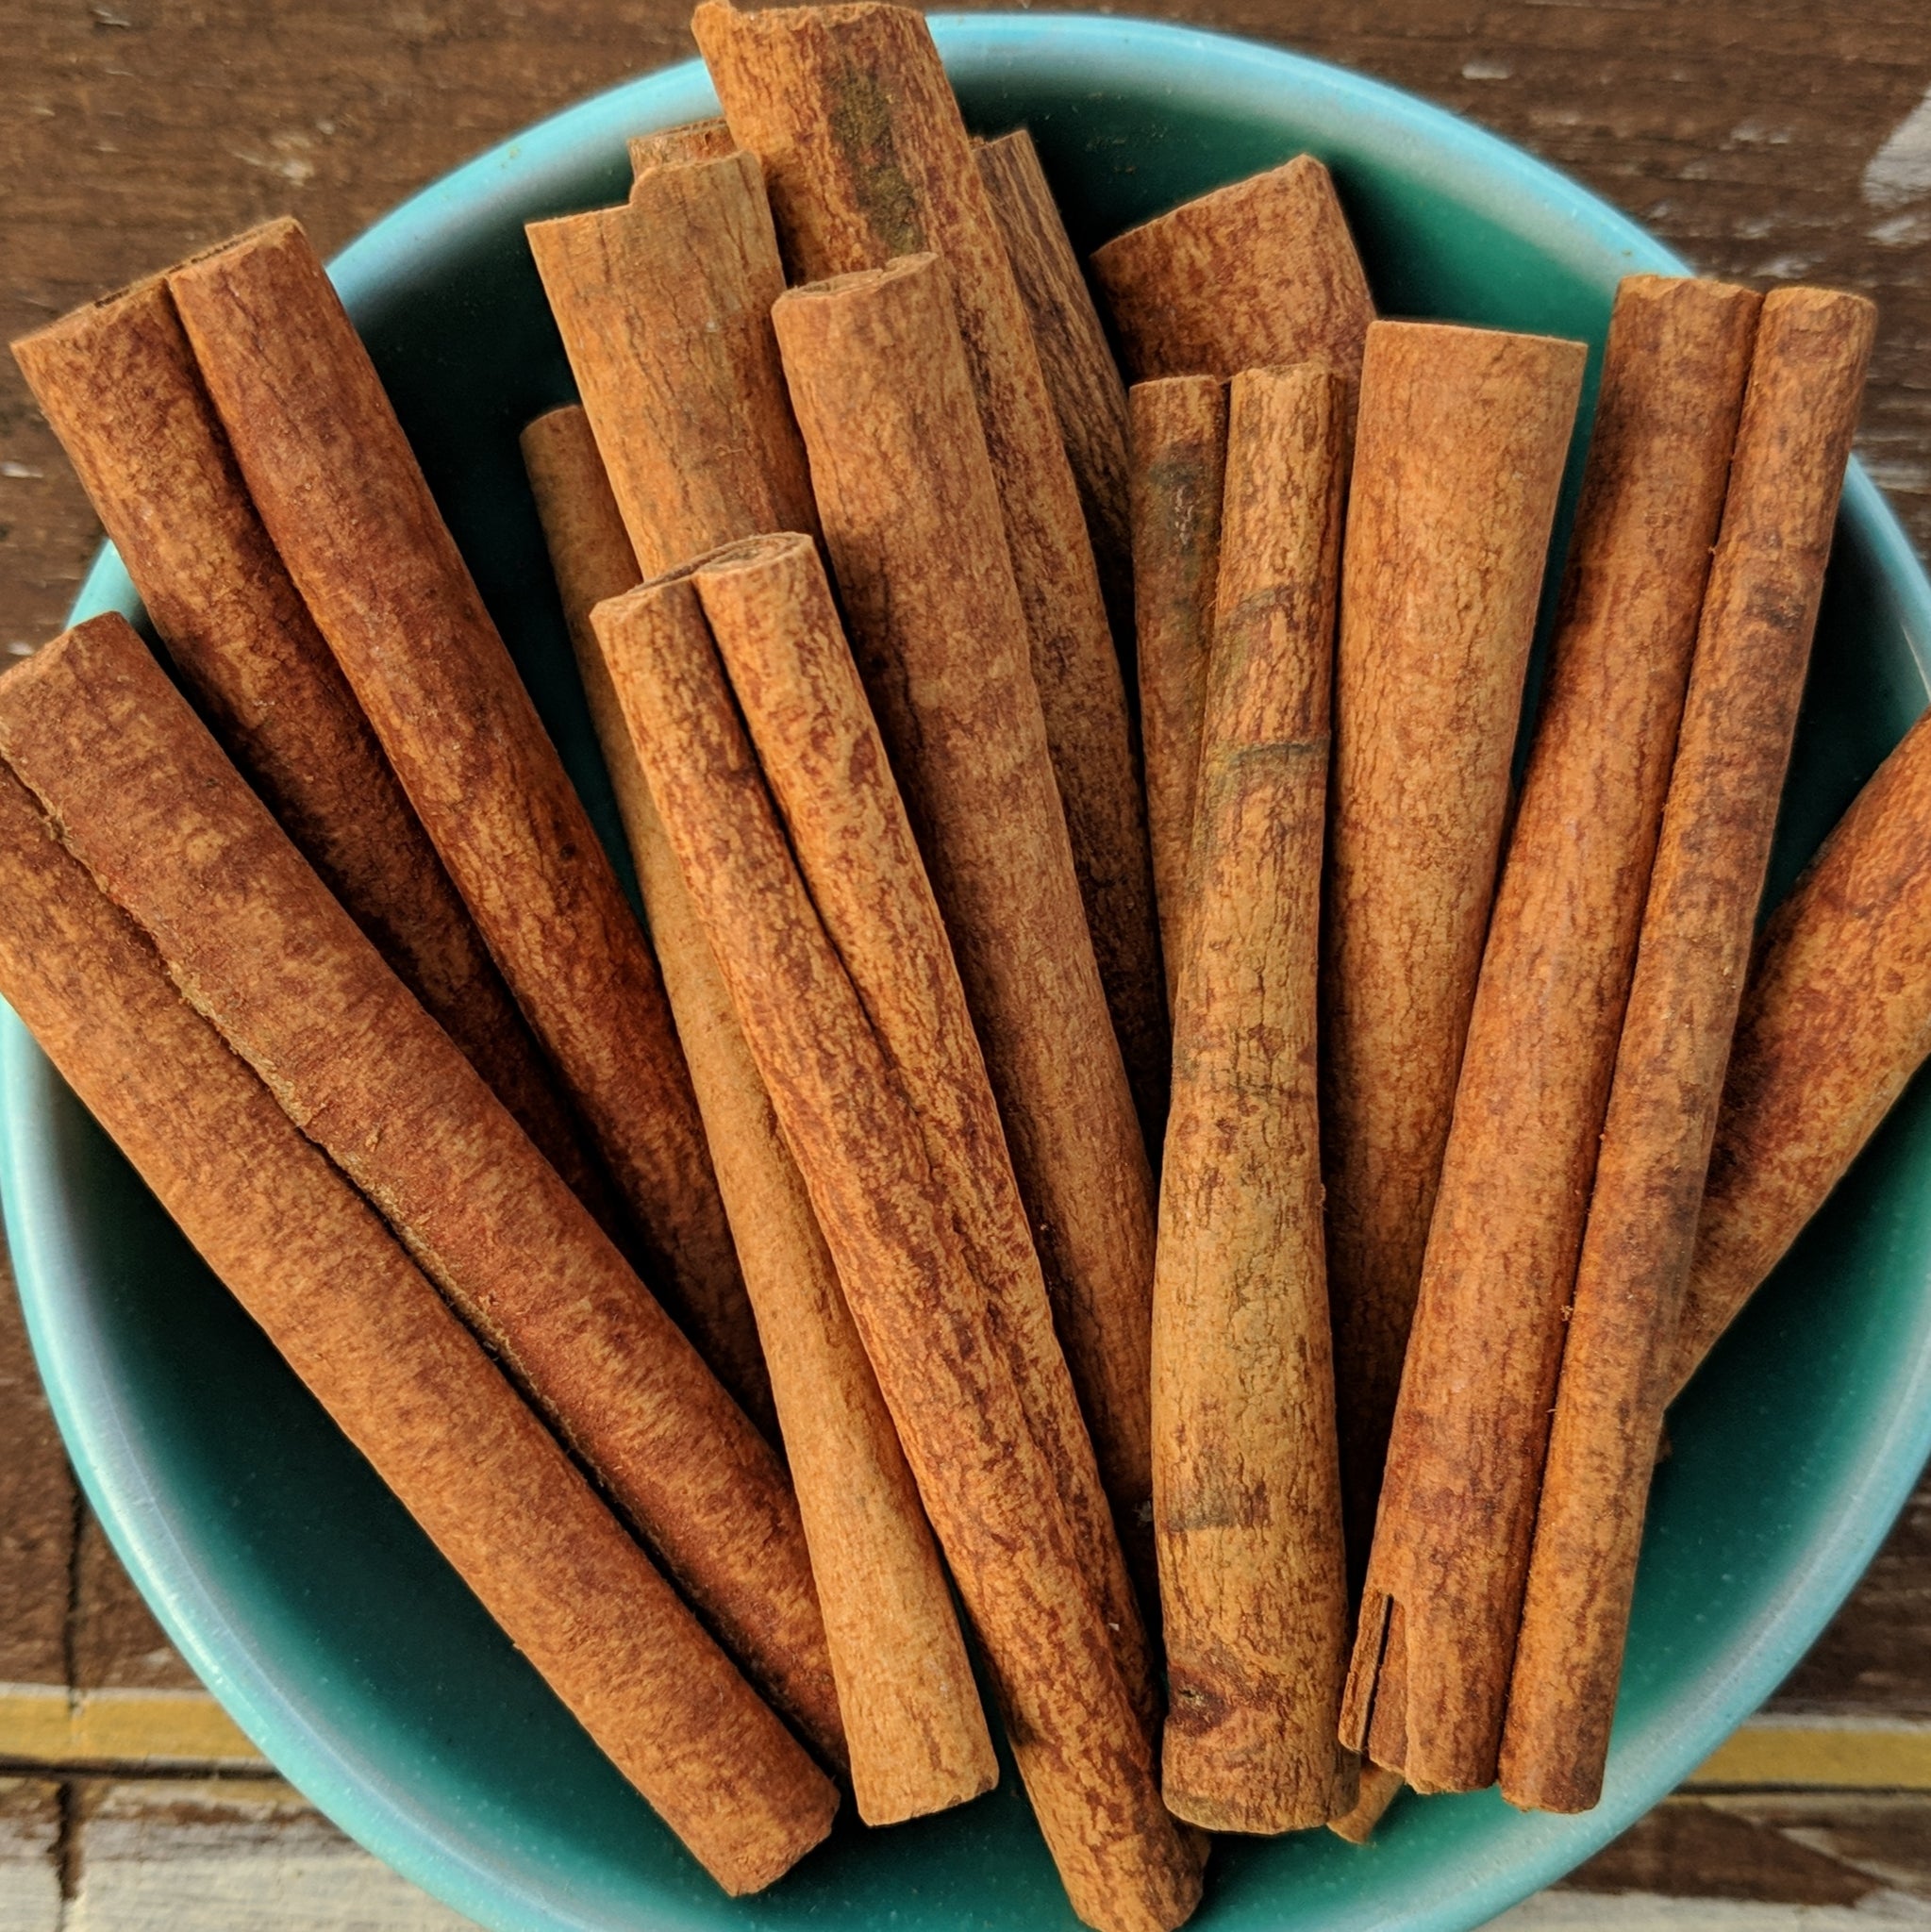 Chinese Cinnamon / Cassia Sticks (Cinnamomum Cassia)